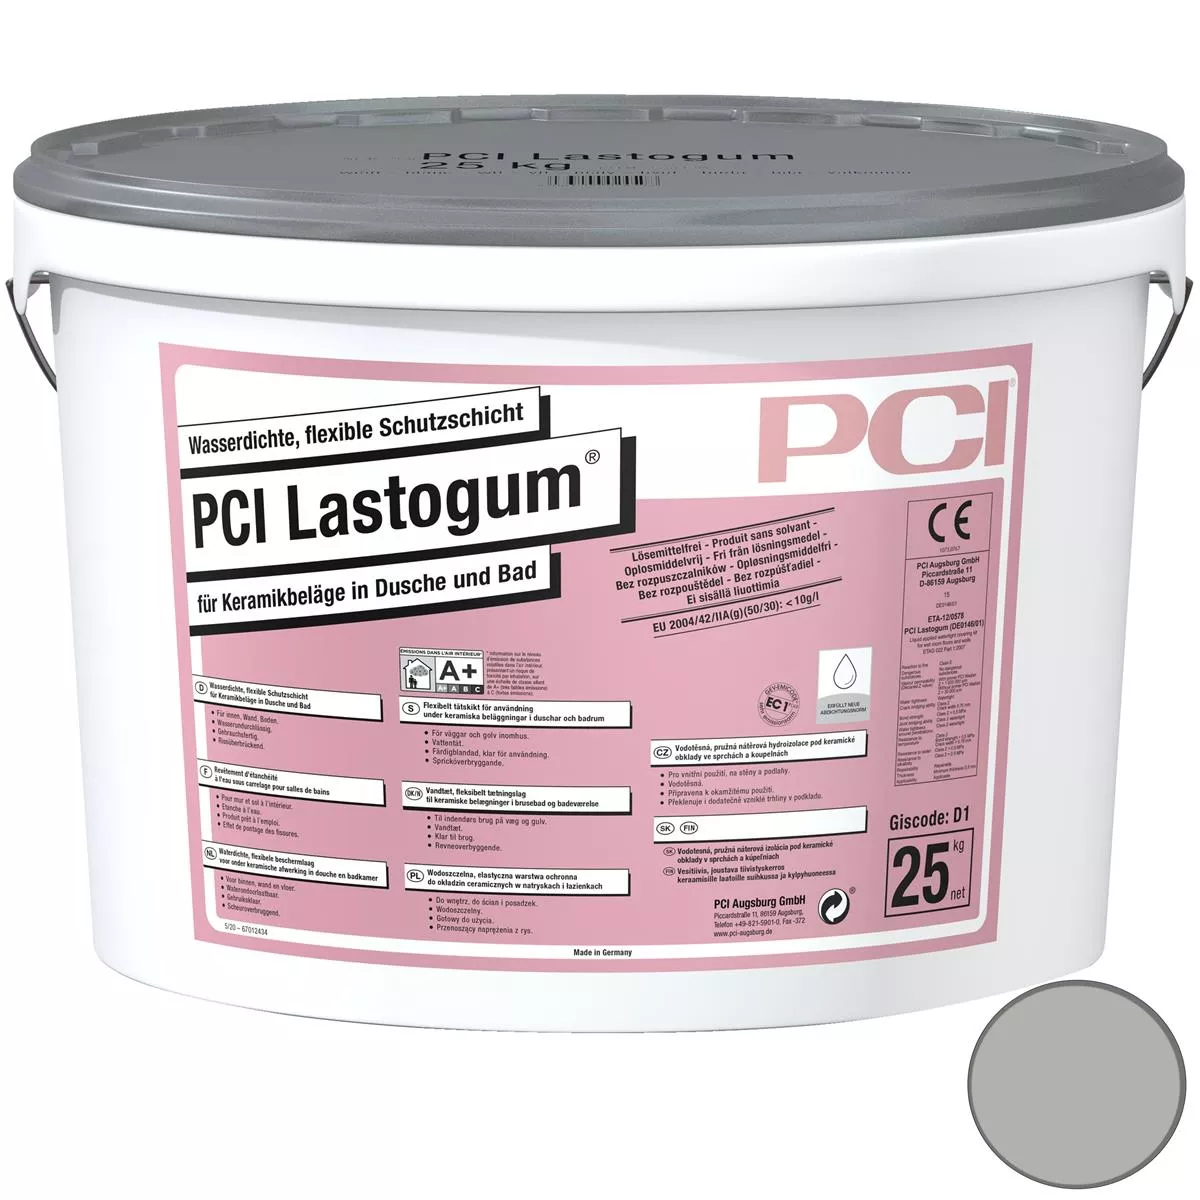 PCI Lastogum Waterproof Flexible Protective Layer Gray 25KG